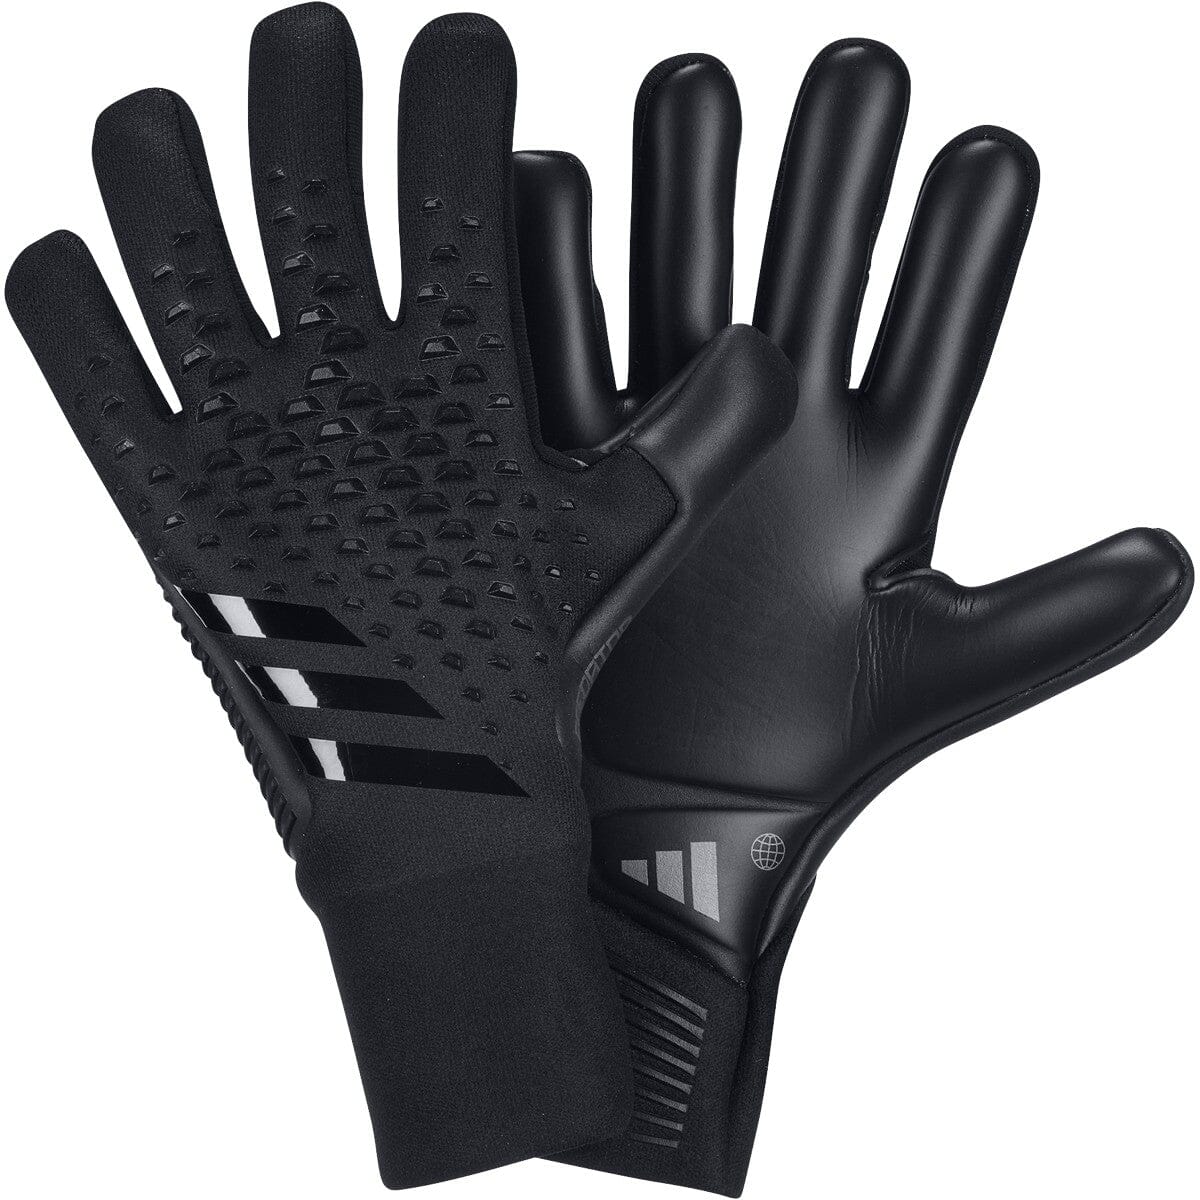 GL Pro Goalkeeper Gloves – Strictly